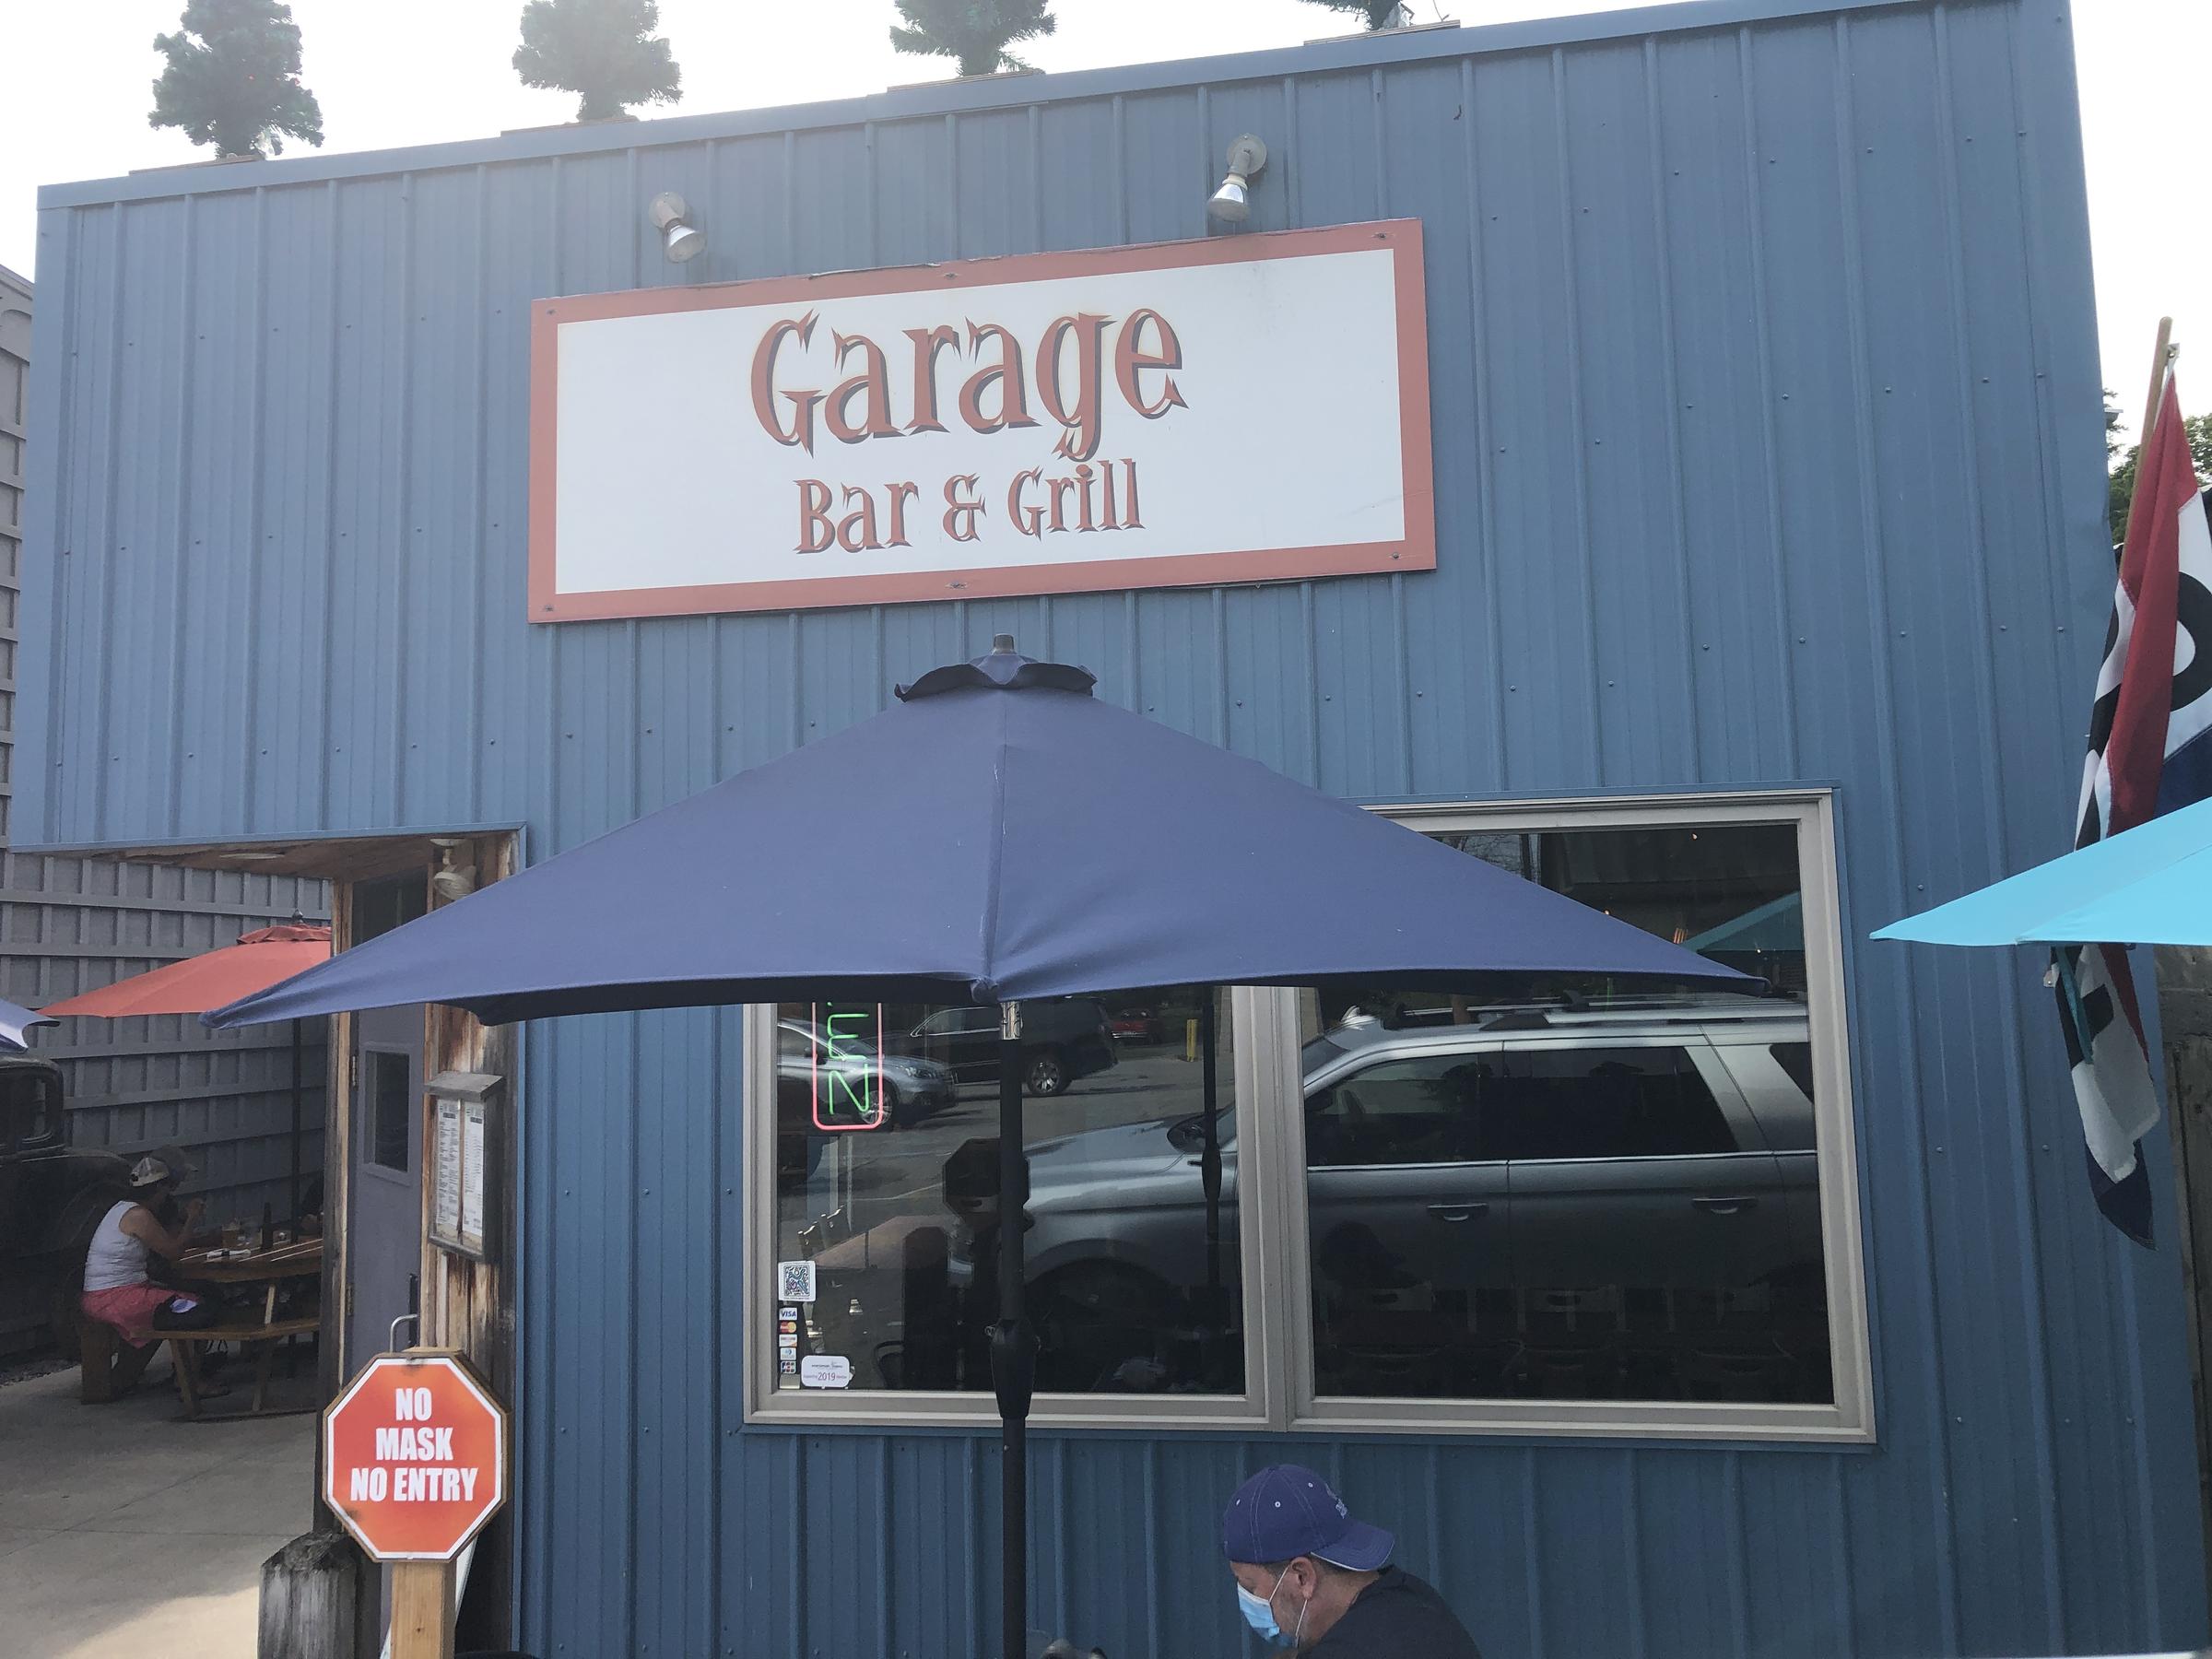 Pet Friendly The Garage Bar & Grill